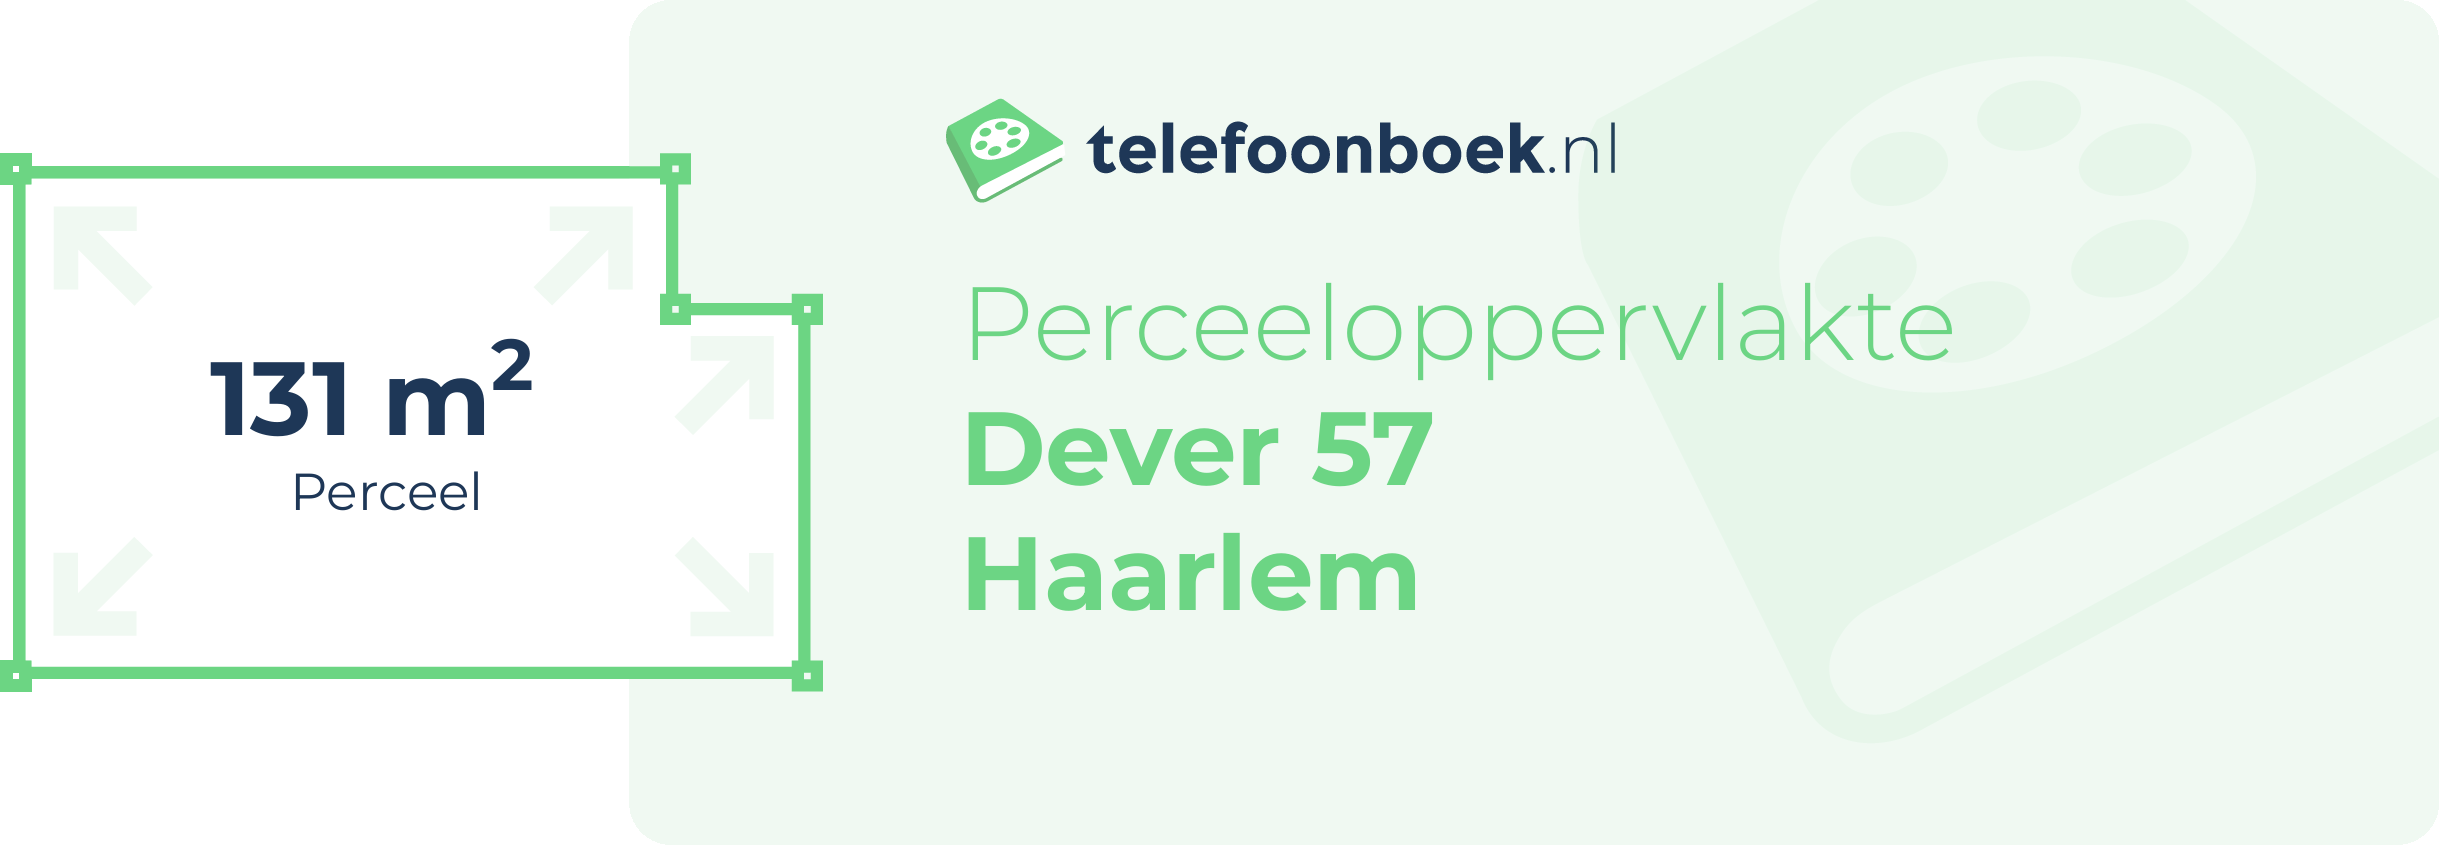 Perceeloppervlakte Dever 57 Haarlem